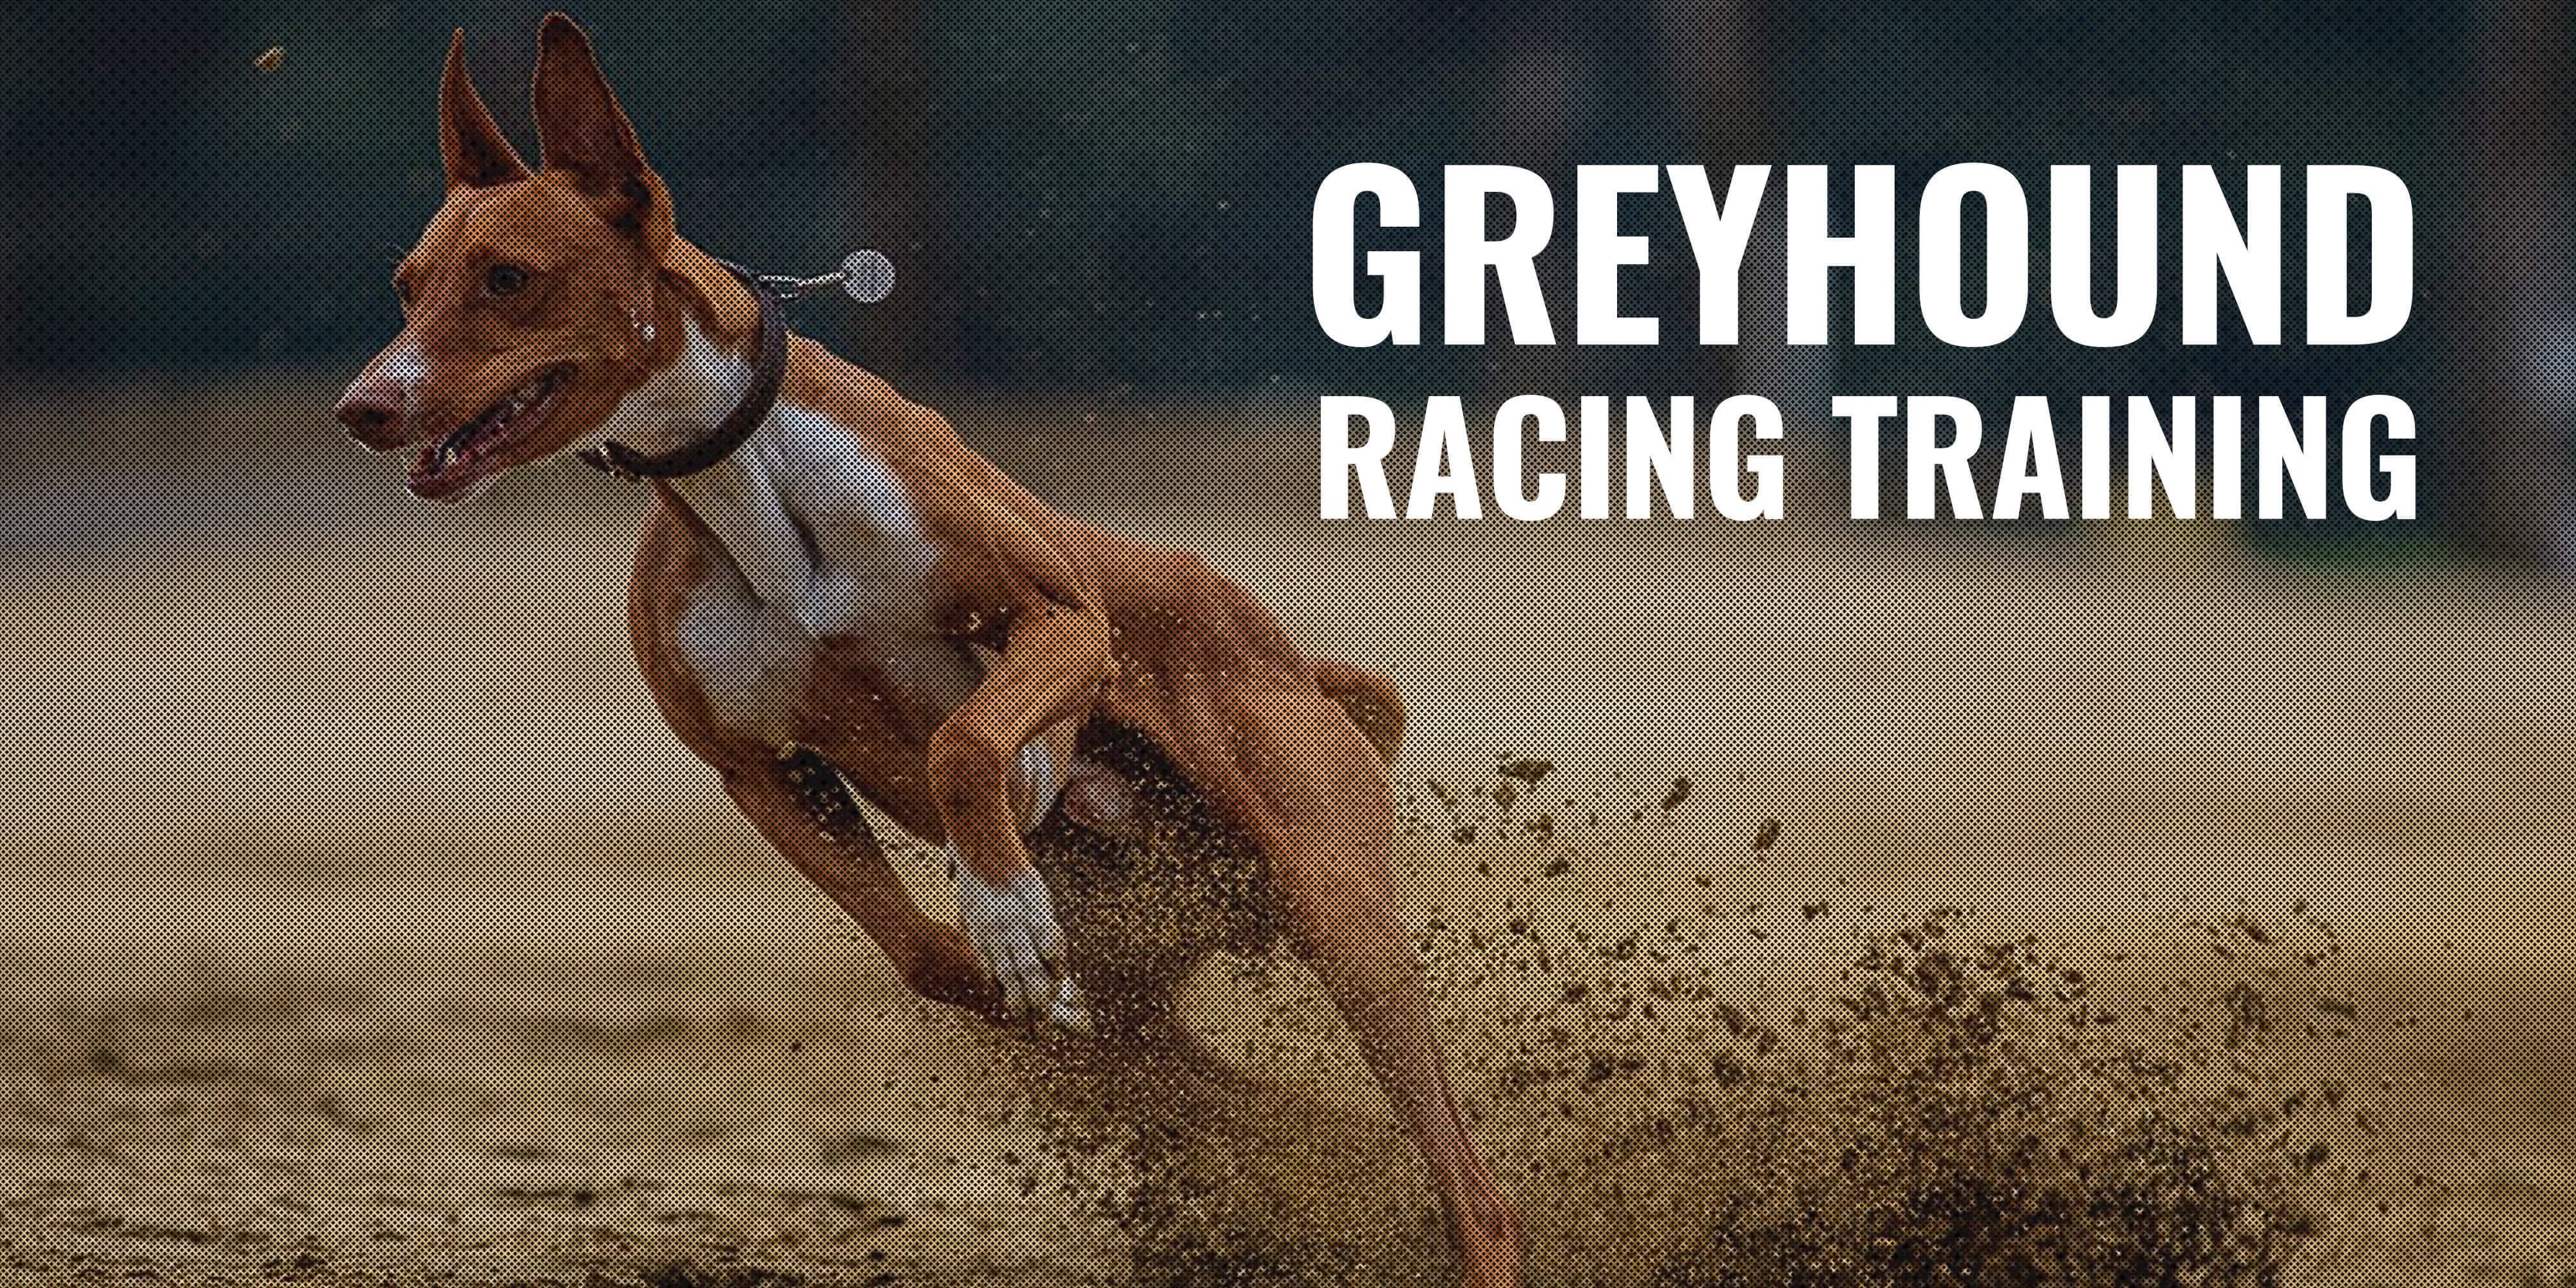 training racing greyhound dogs